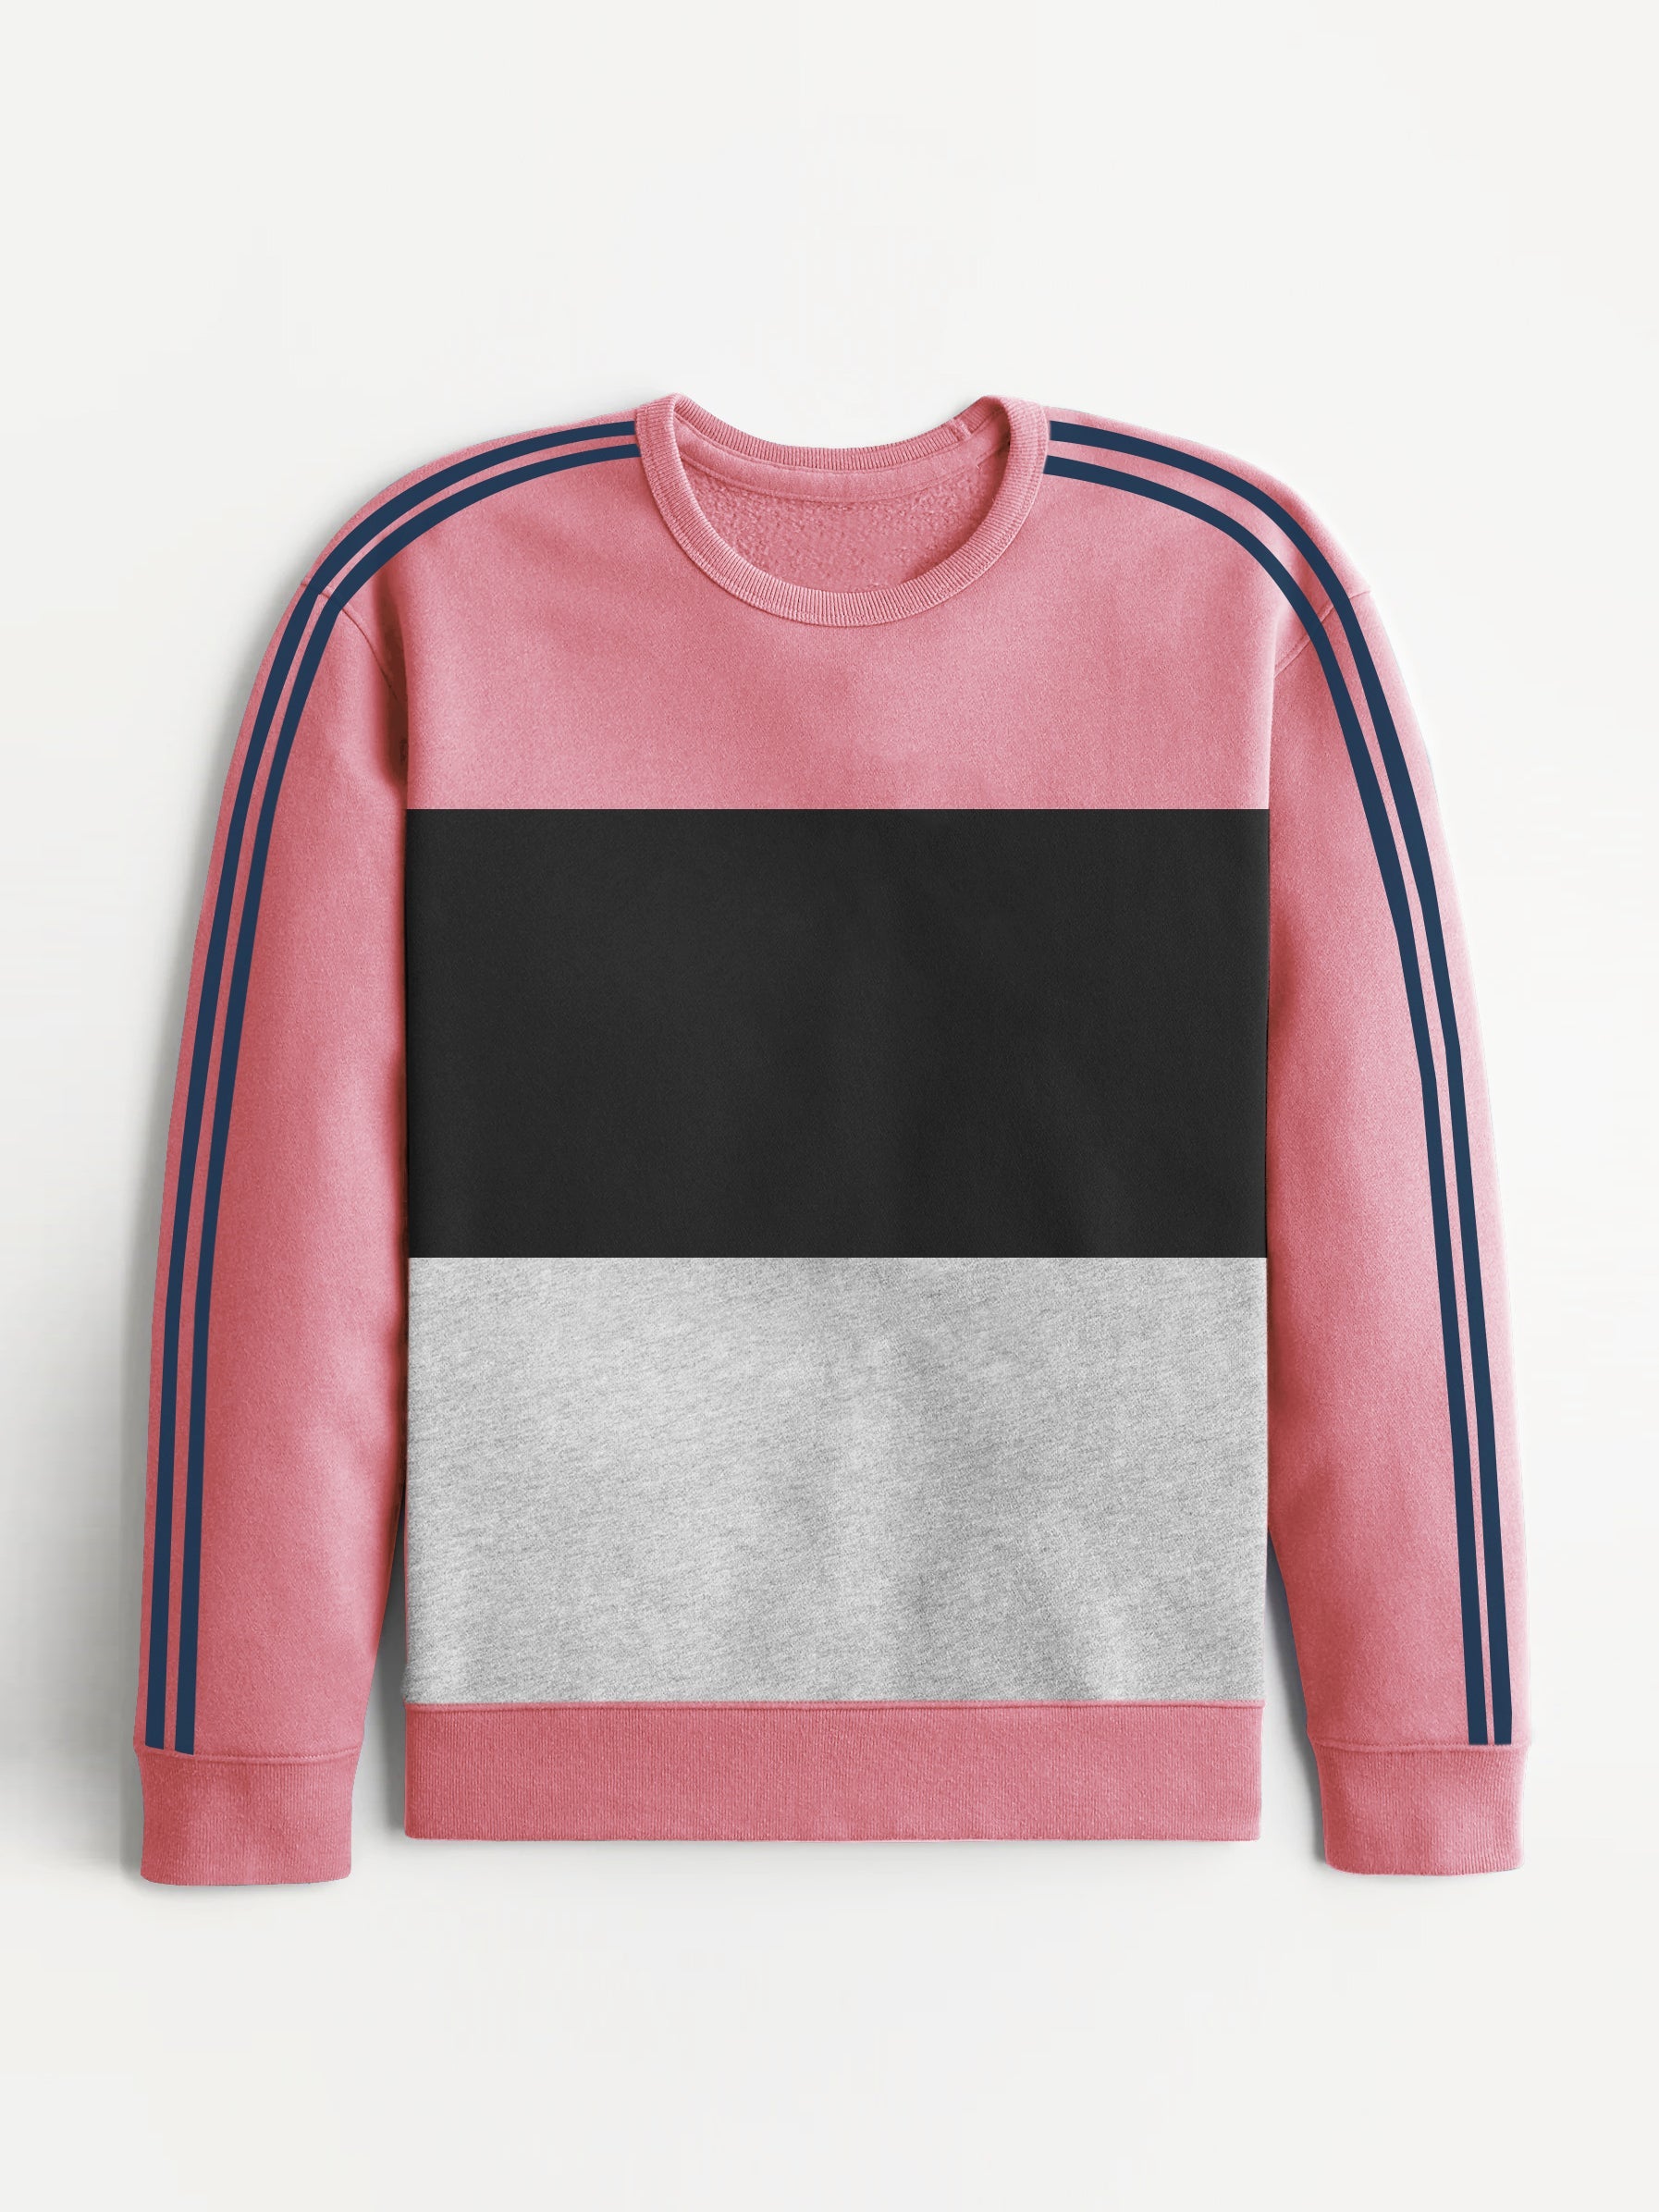 Premium Quality Crew Neck Fleece Sweatshirt For Men-Pink With Navy Stripes-RT1778